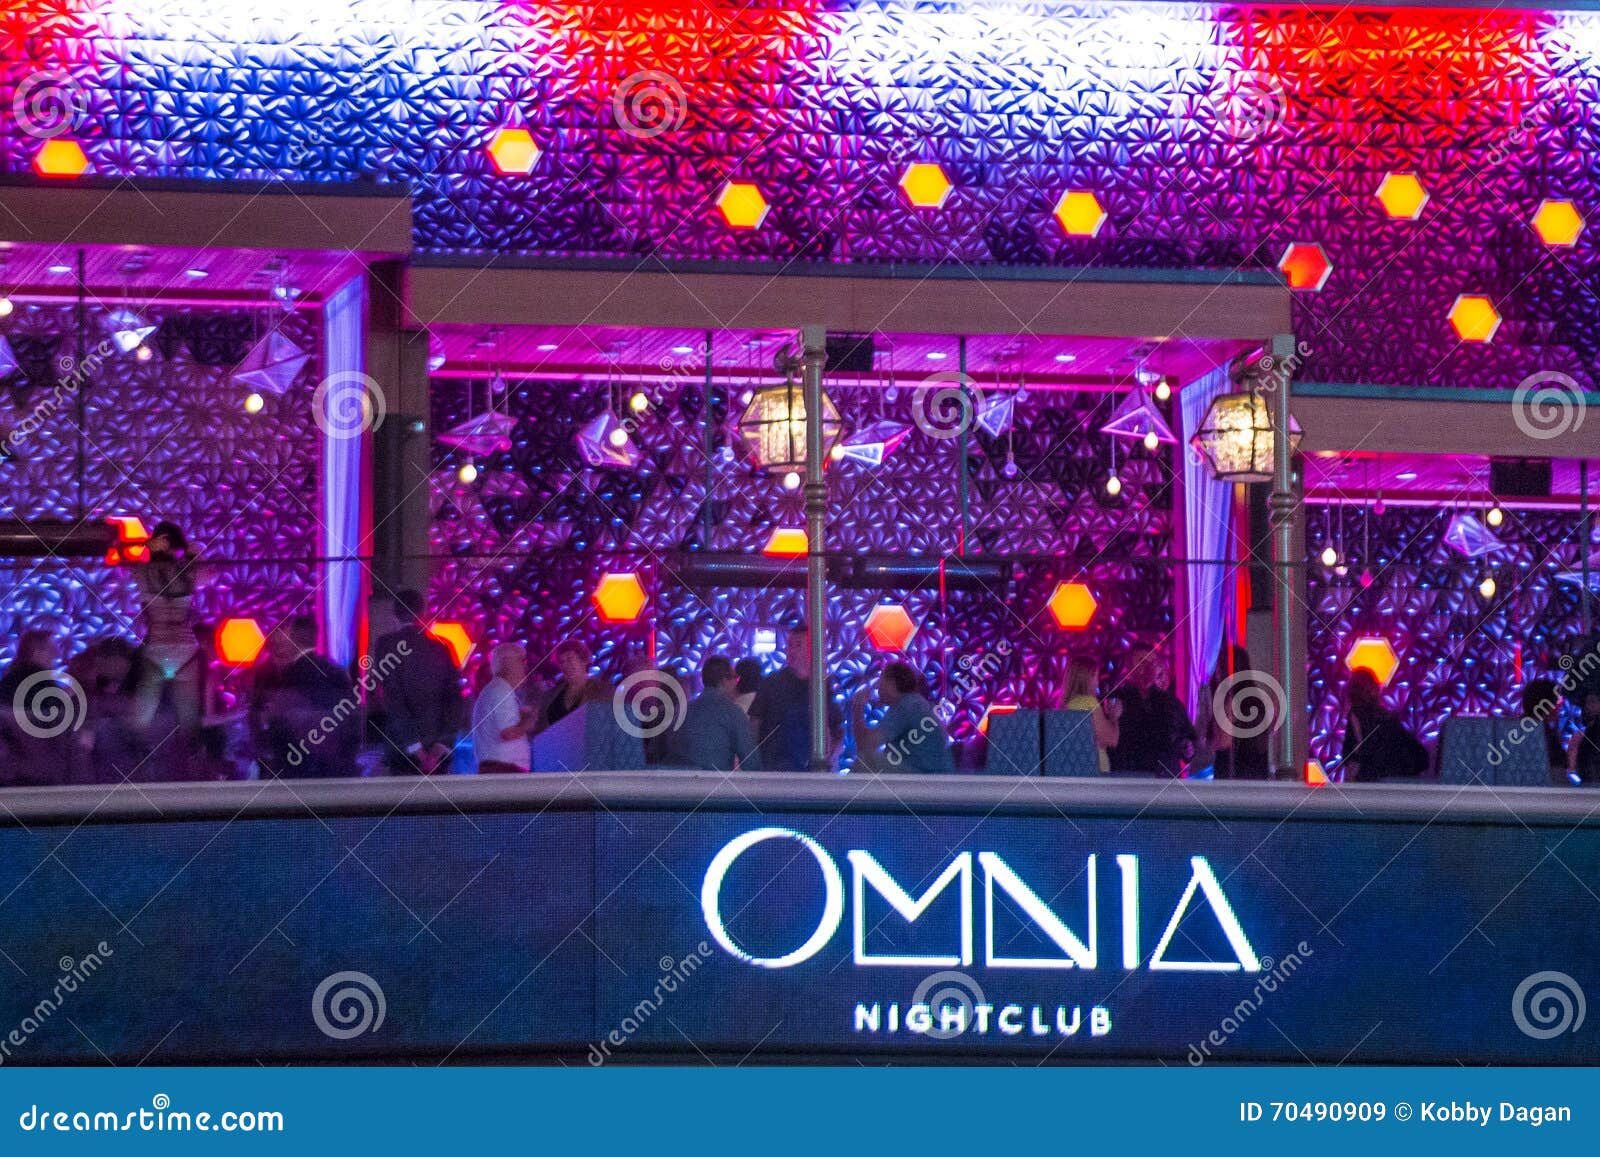 Las Vegas , Omnia Night club. LAS VEGAS - APRIL 13 : The Omnia Night club in Ceasars palace hotel in Las Vegas on April 13 2016. The multi-leve , 75,000-square-foot venue opend in 2015